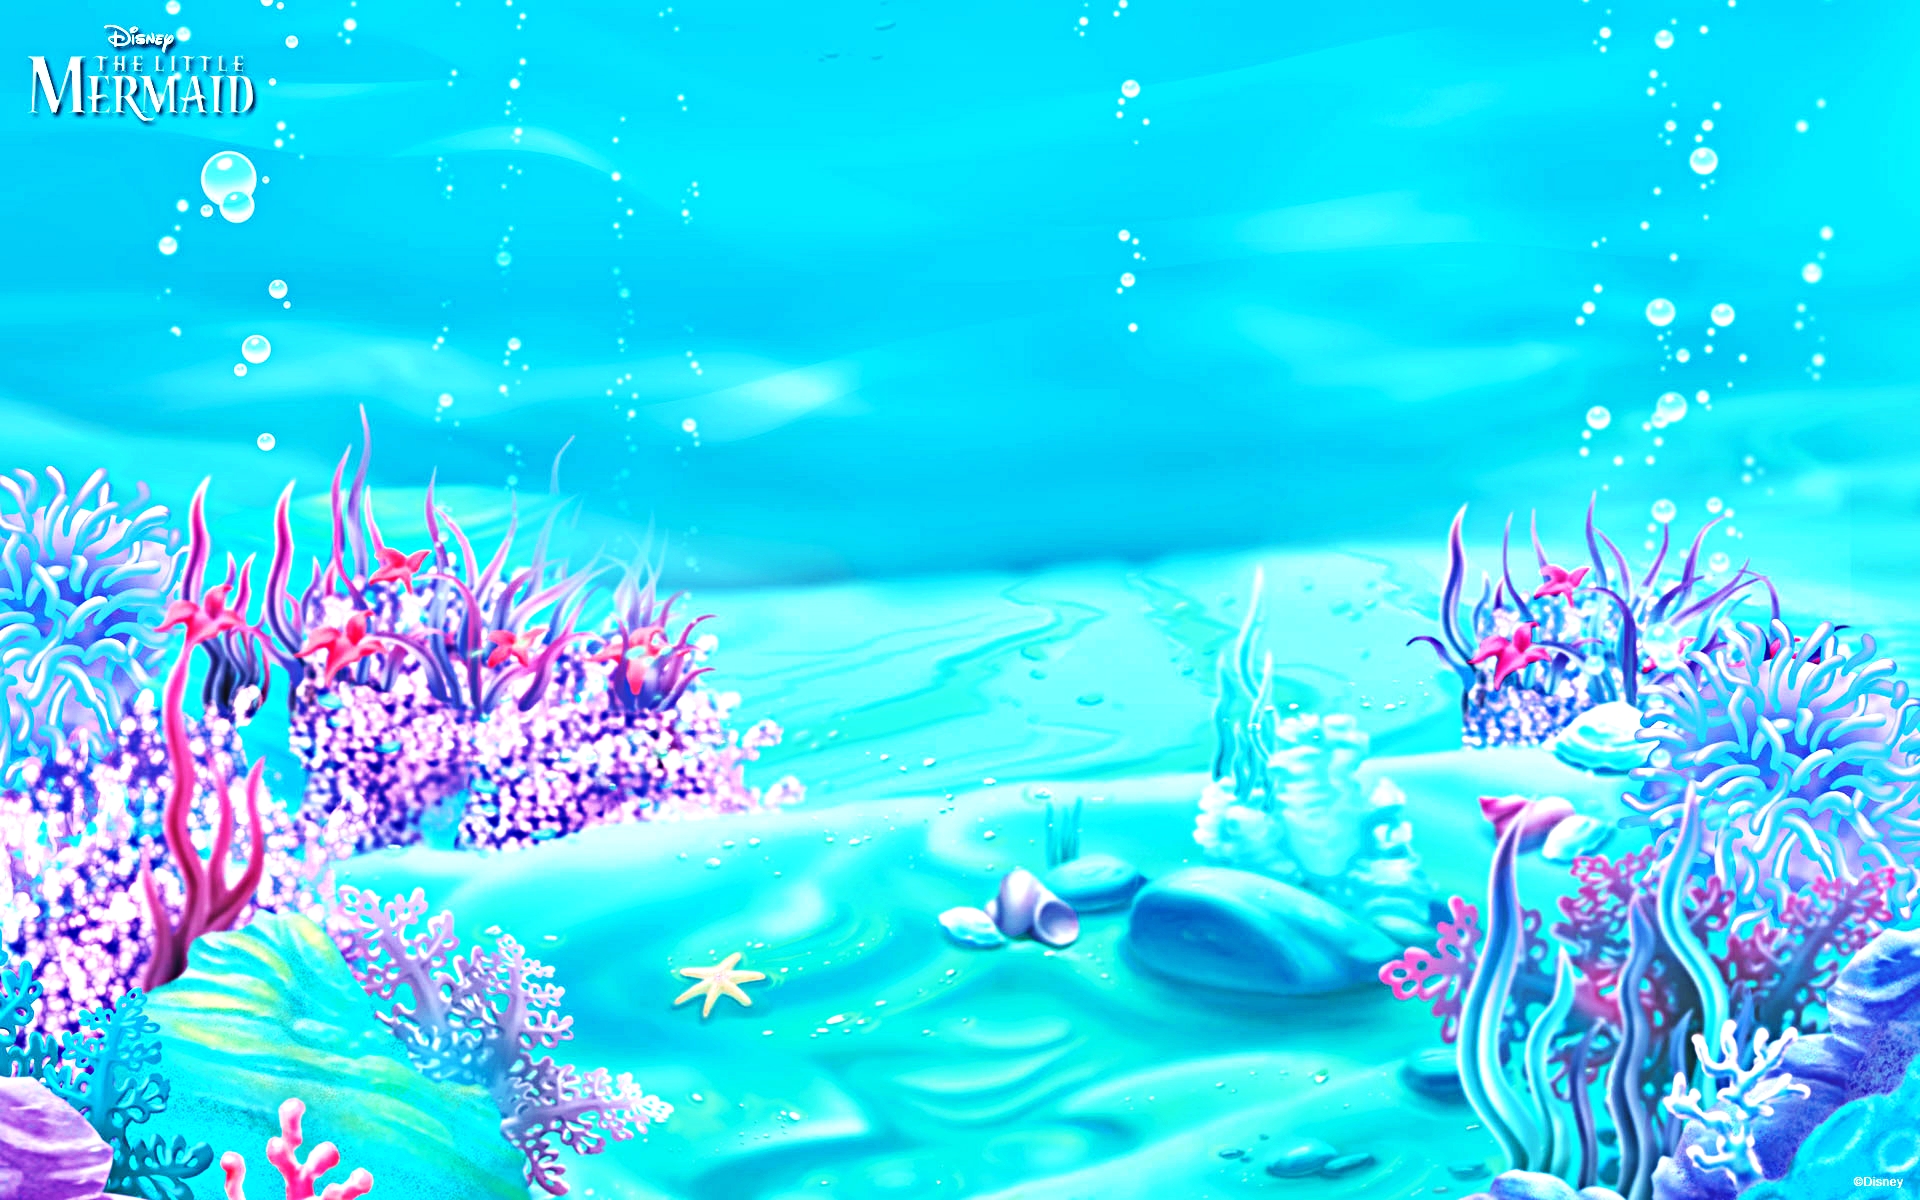 Little Mermaid HD Wallpaper - WallpaperSafari